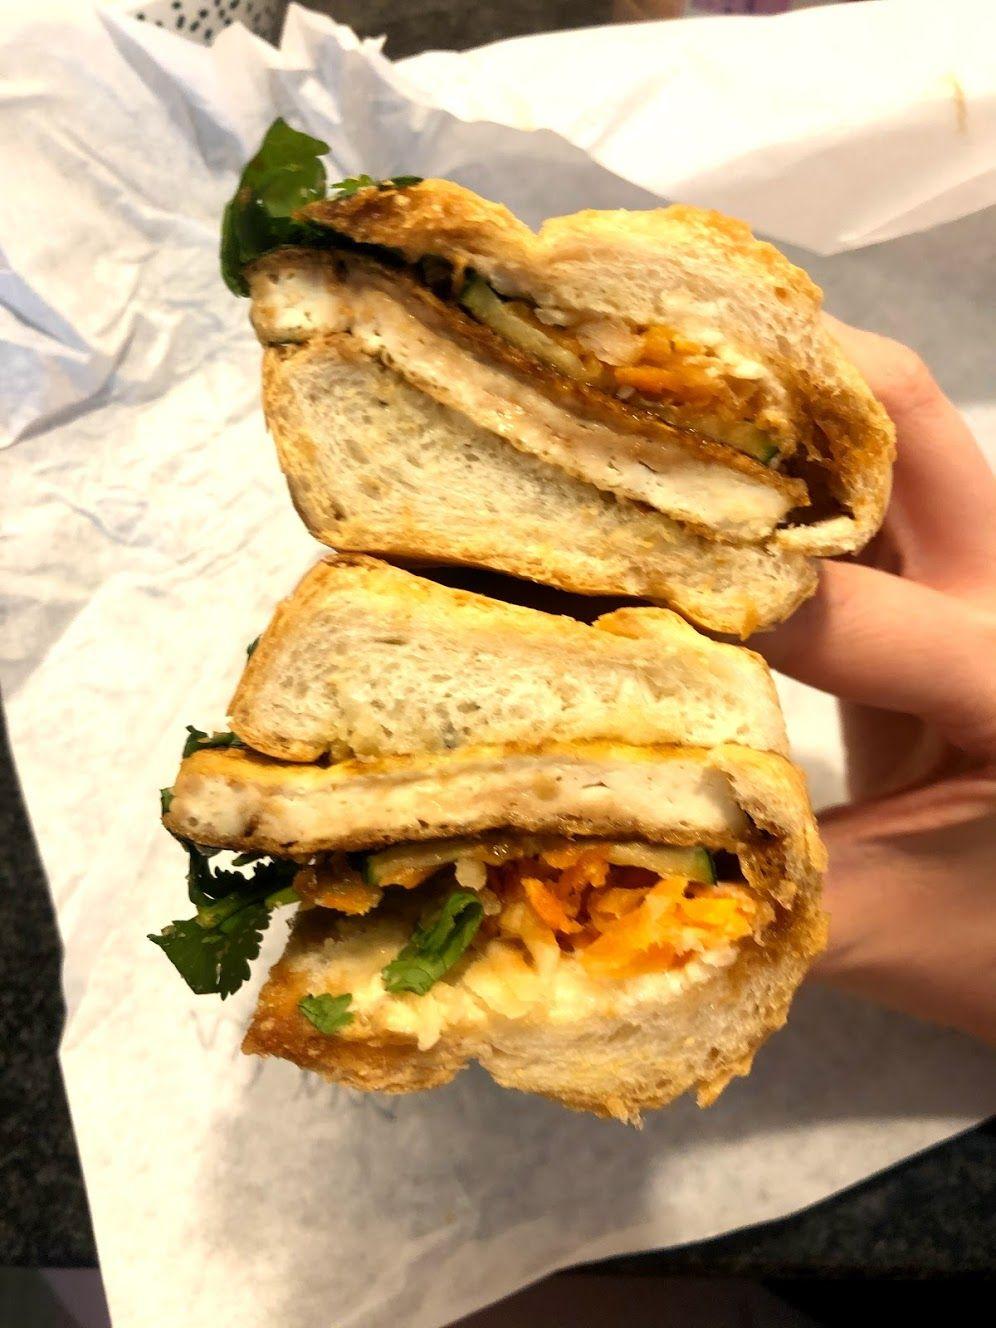 Holding up a Bahn Mi sandwich from Sandwich Hag.